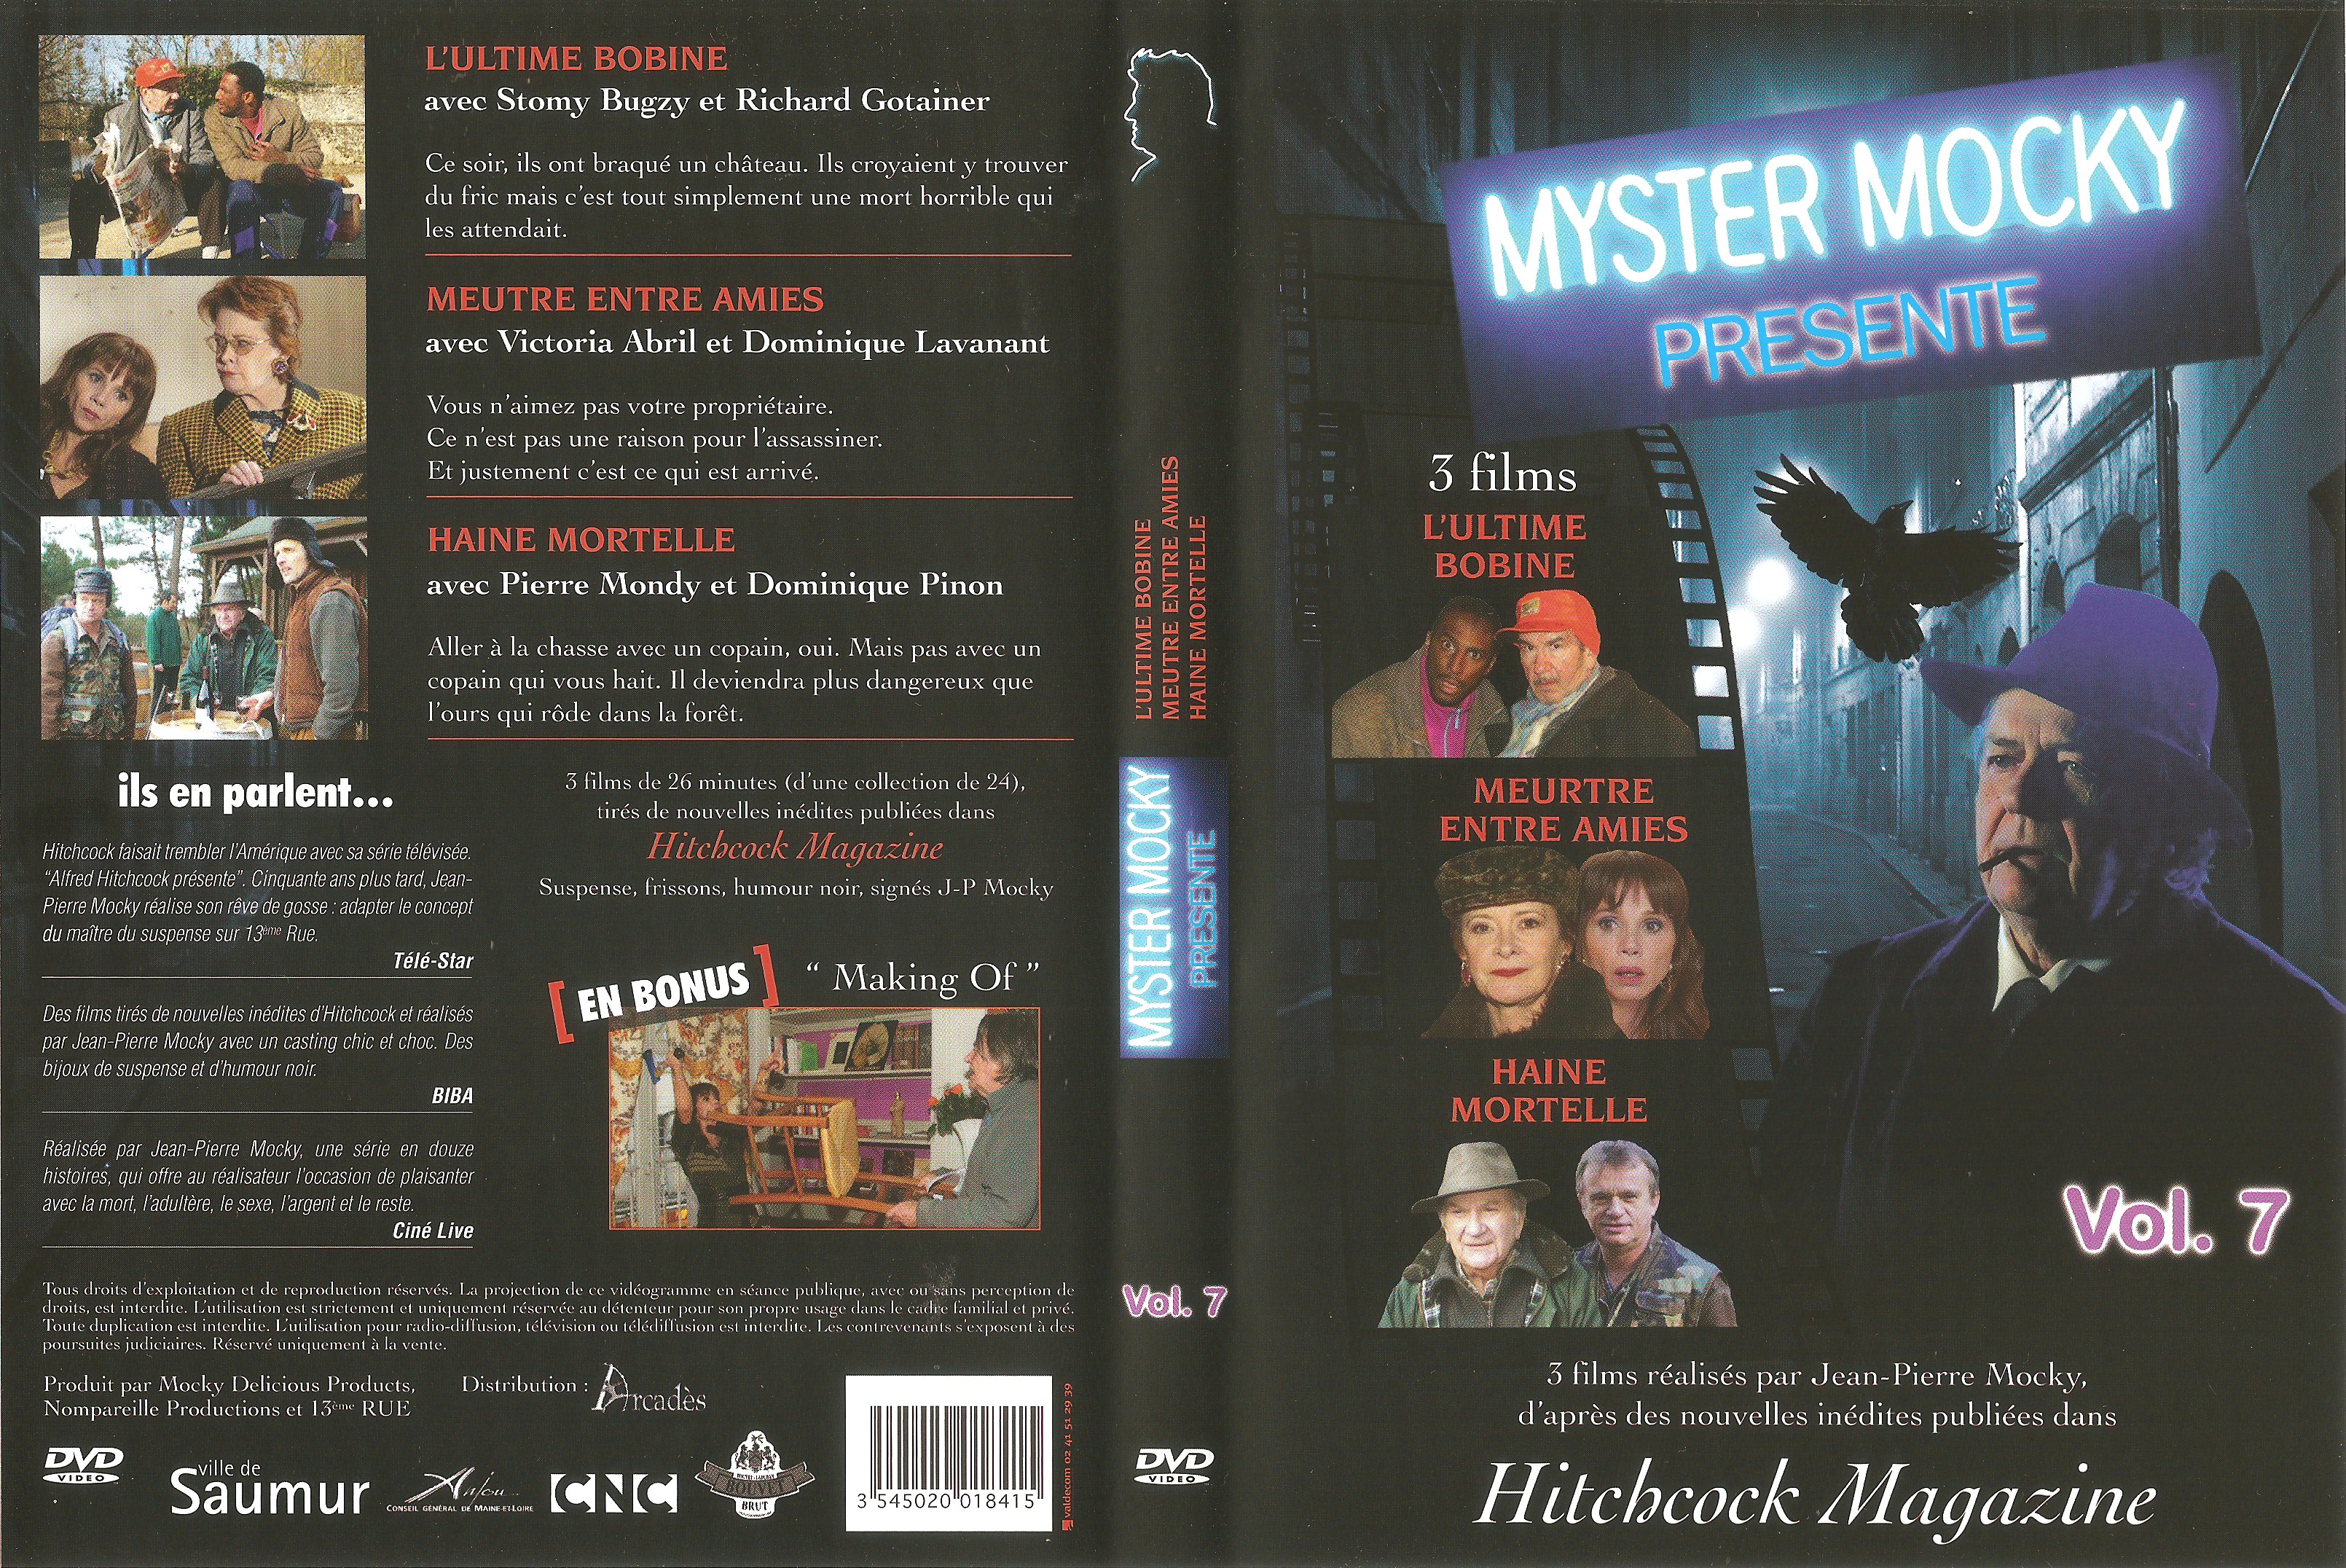 Jaquette DVD Myster Mocky prsente Vol 07